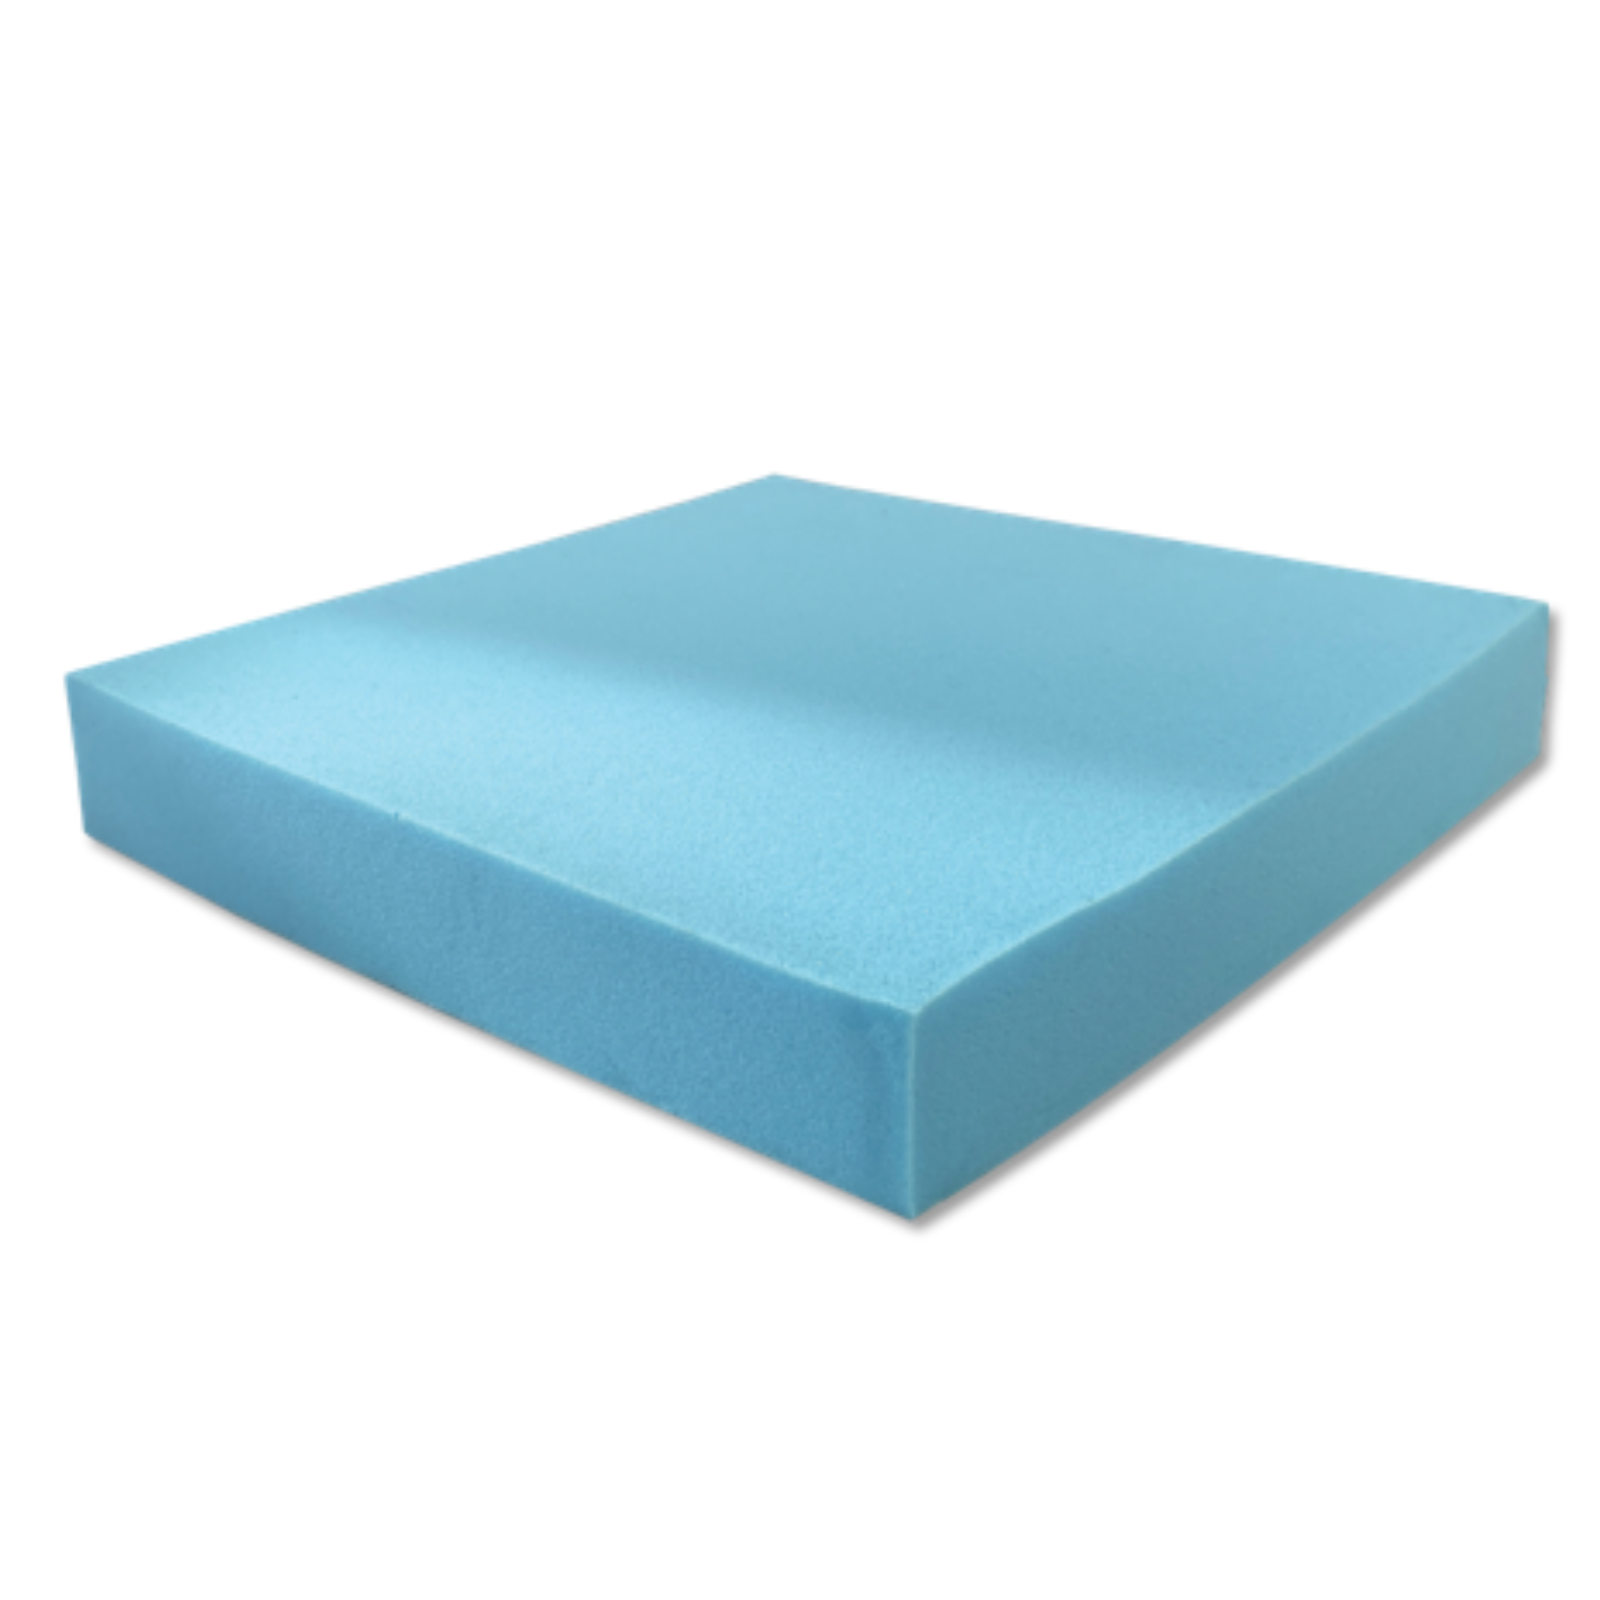 Lowzone Eco Memory Foam Cushion - Comfort & Support